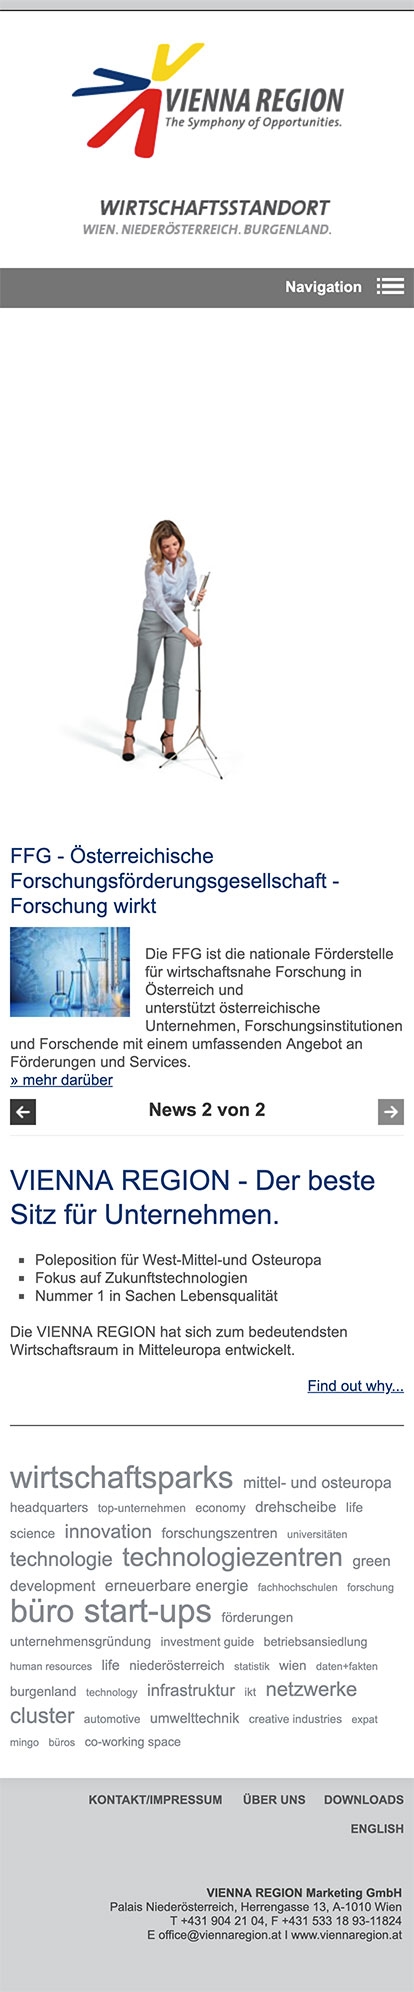 Vienna Region Marketing | viennaregion.at | 2013 (Phone Full Scroll) © echonet communication